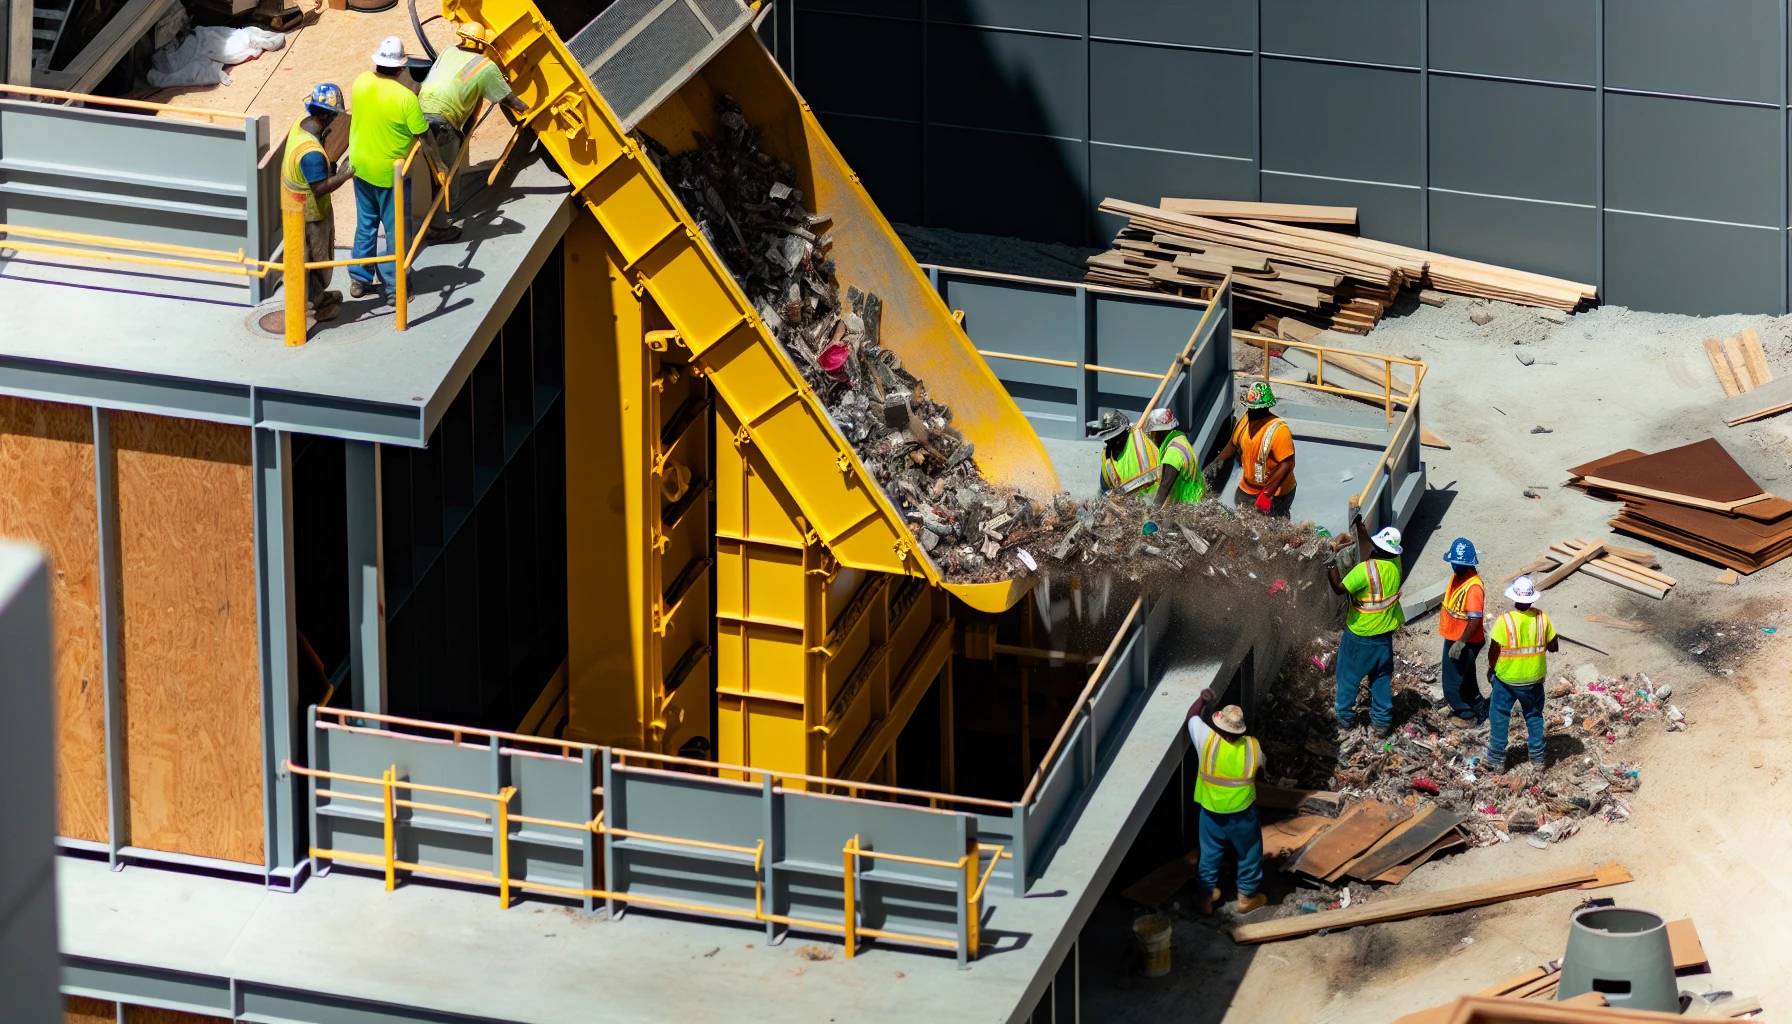 A construction site with debris sliding down a chute